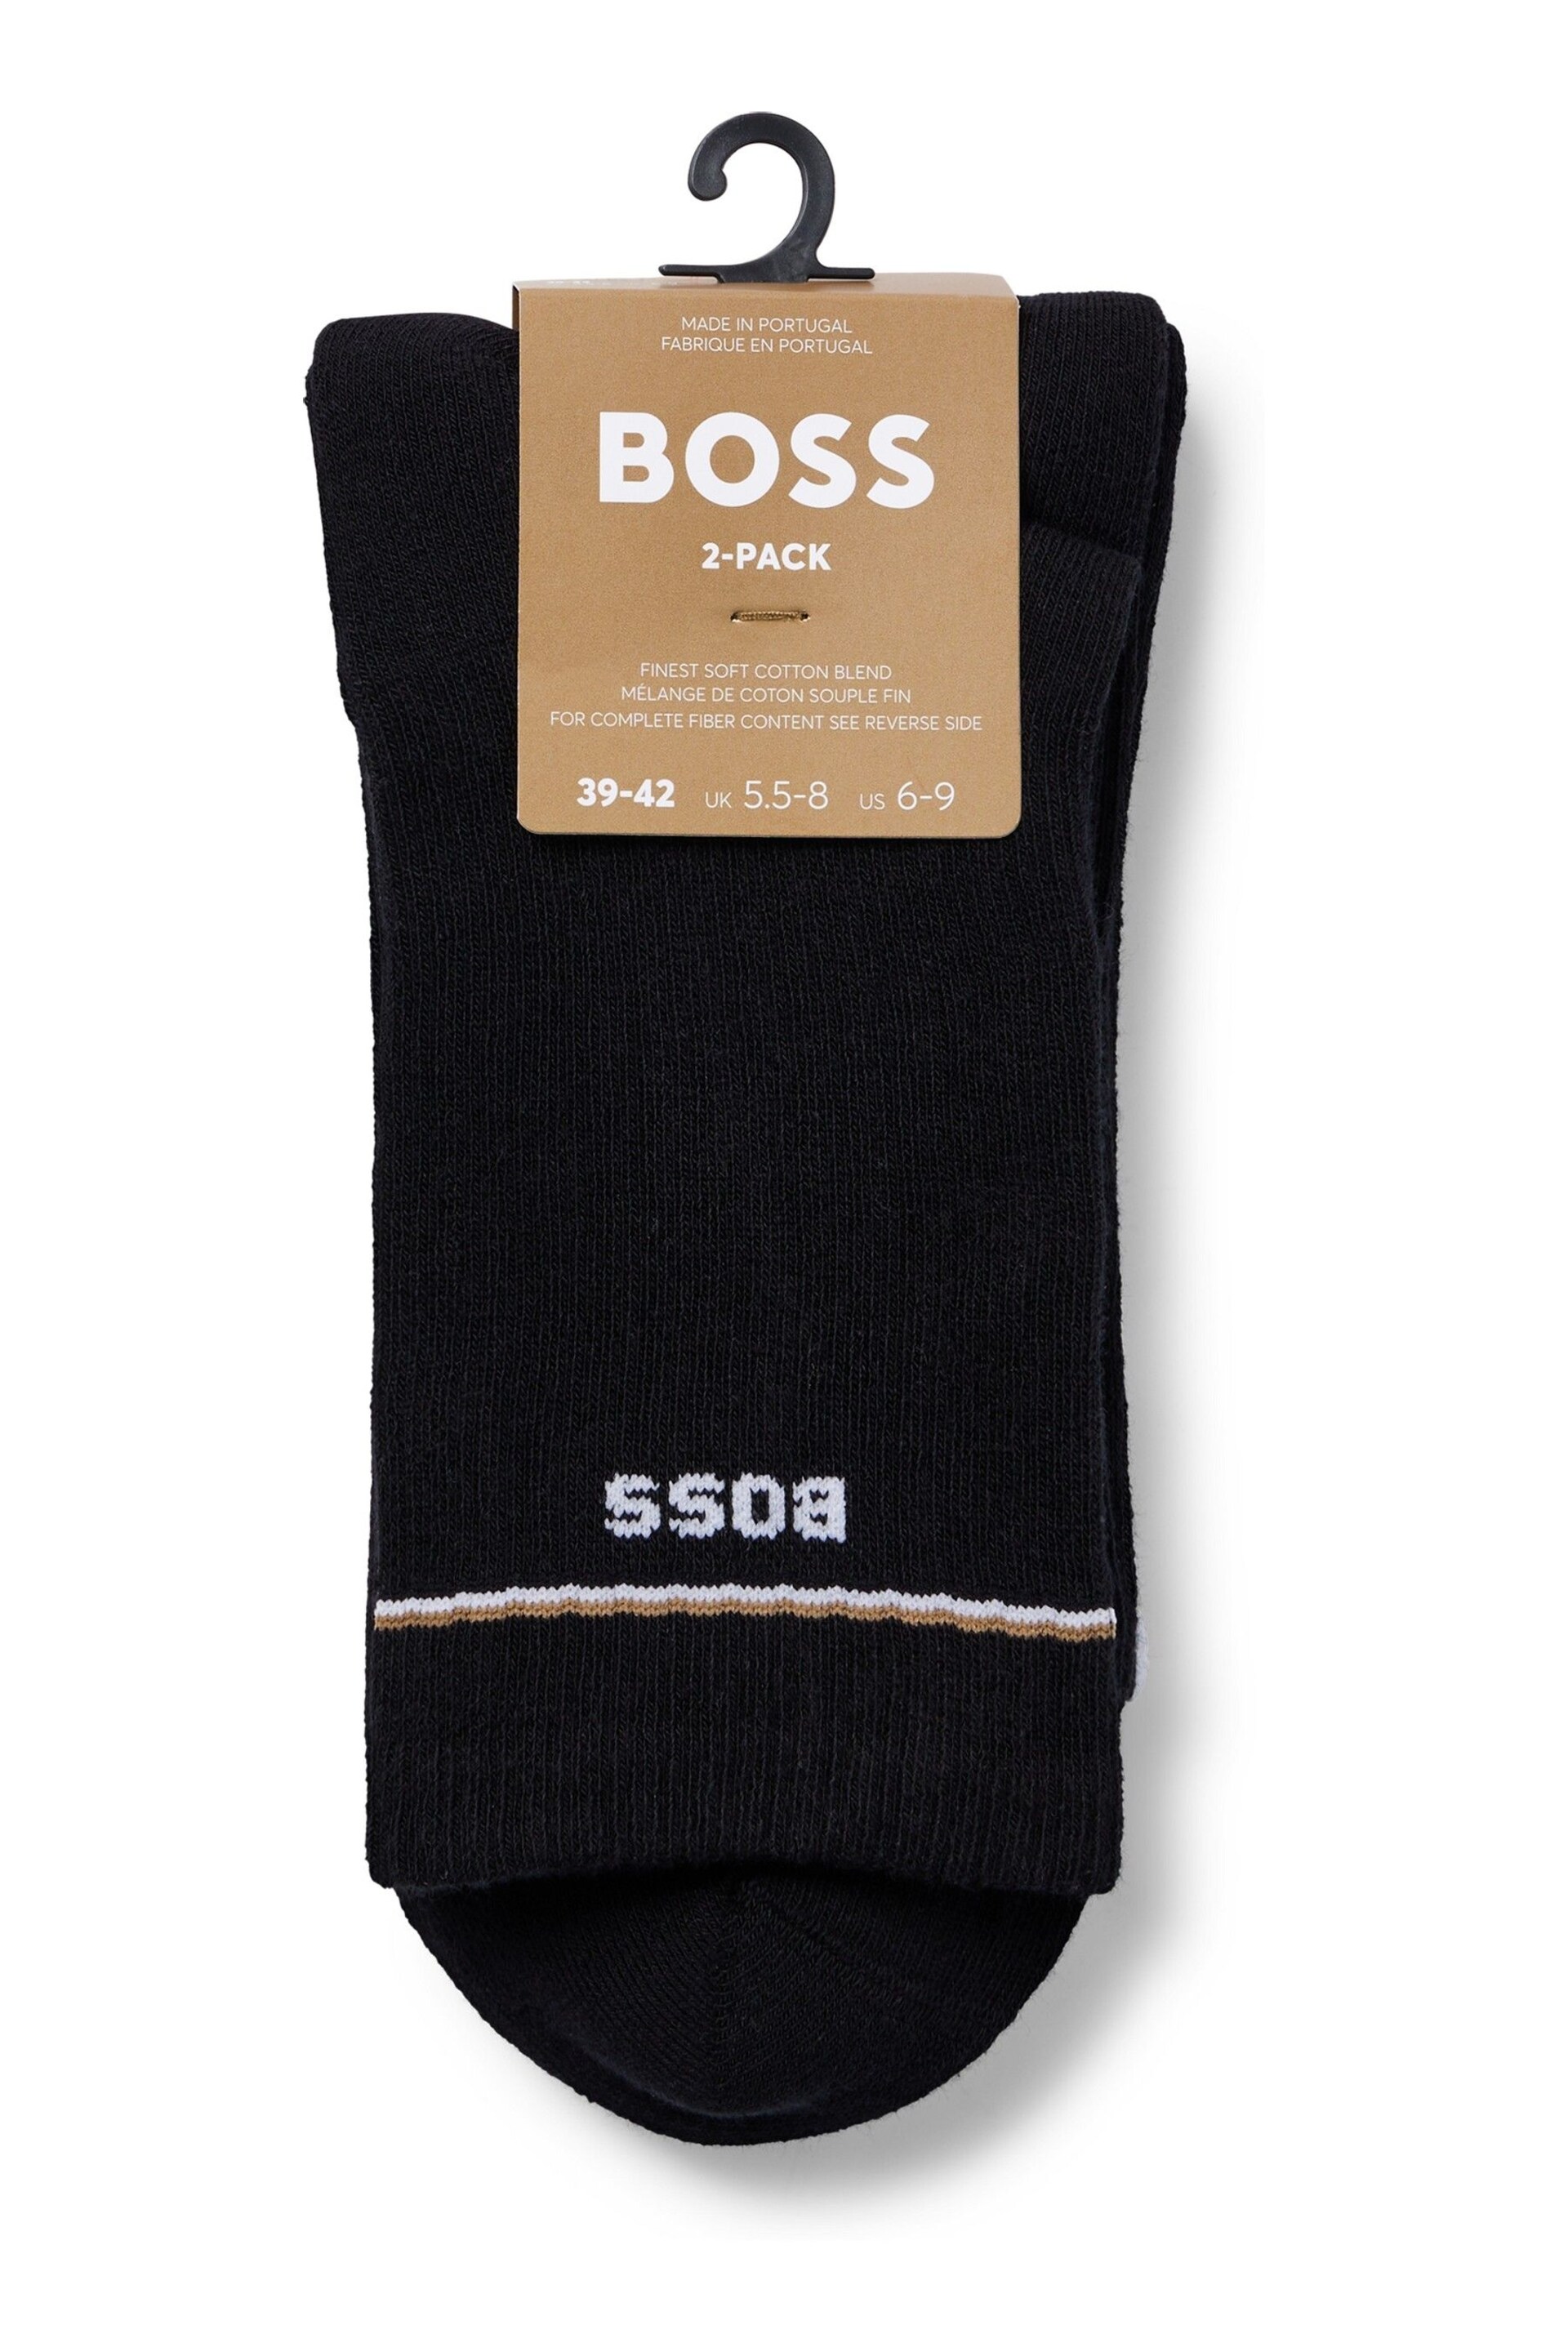 BOSS Black Iconic Logo Stripe Ribbed Socks 2 Pack - Image 2 of 3